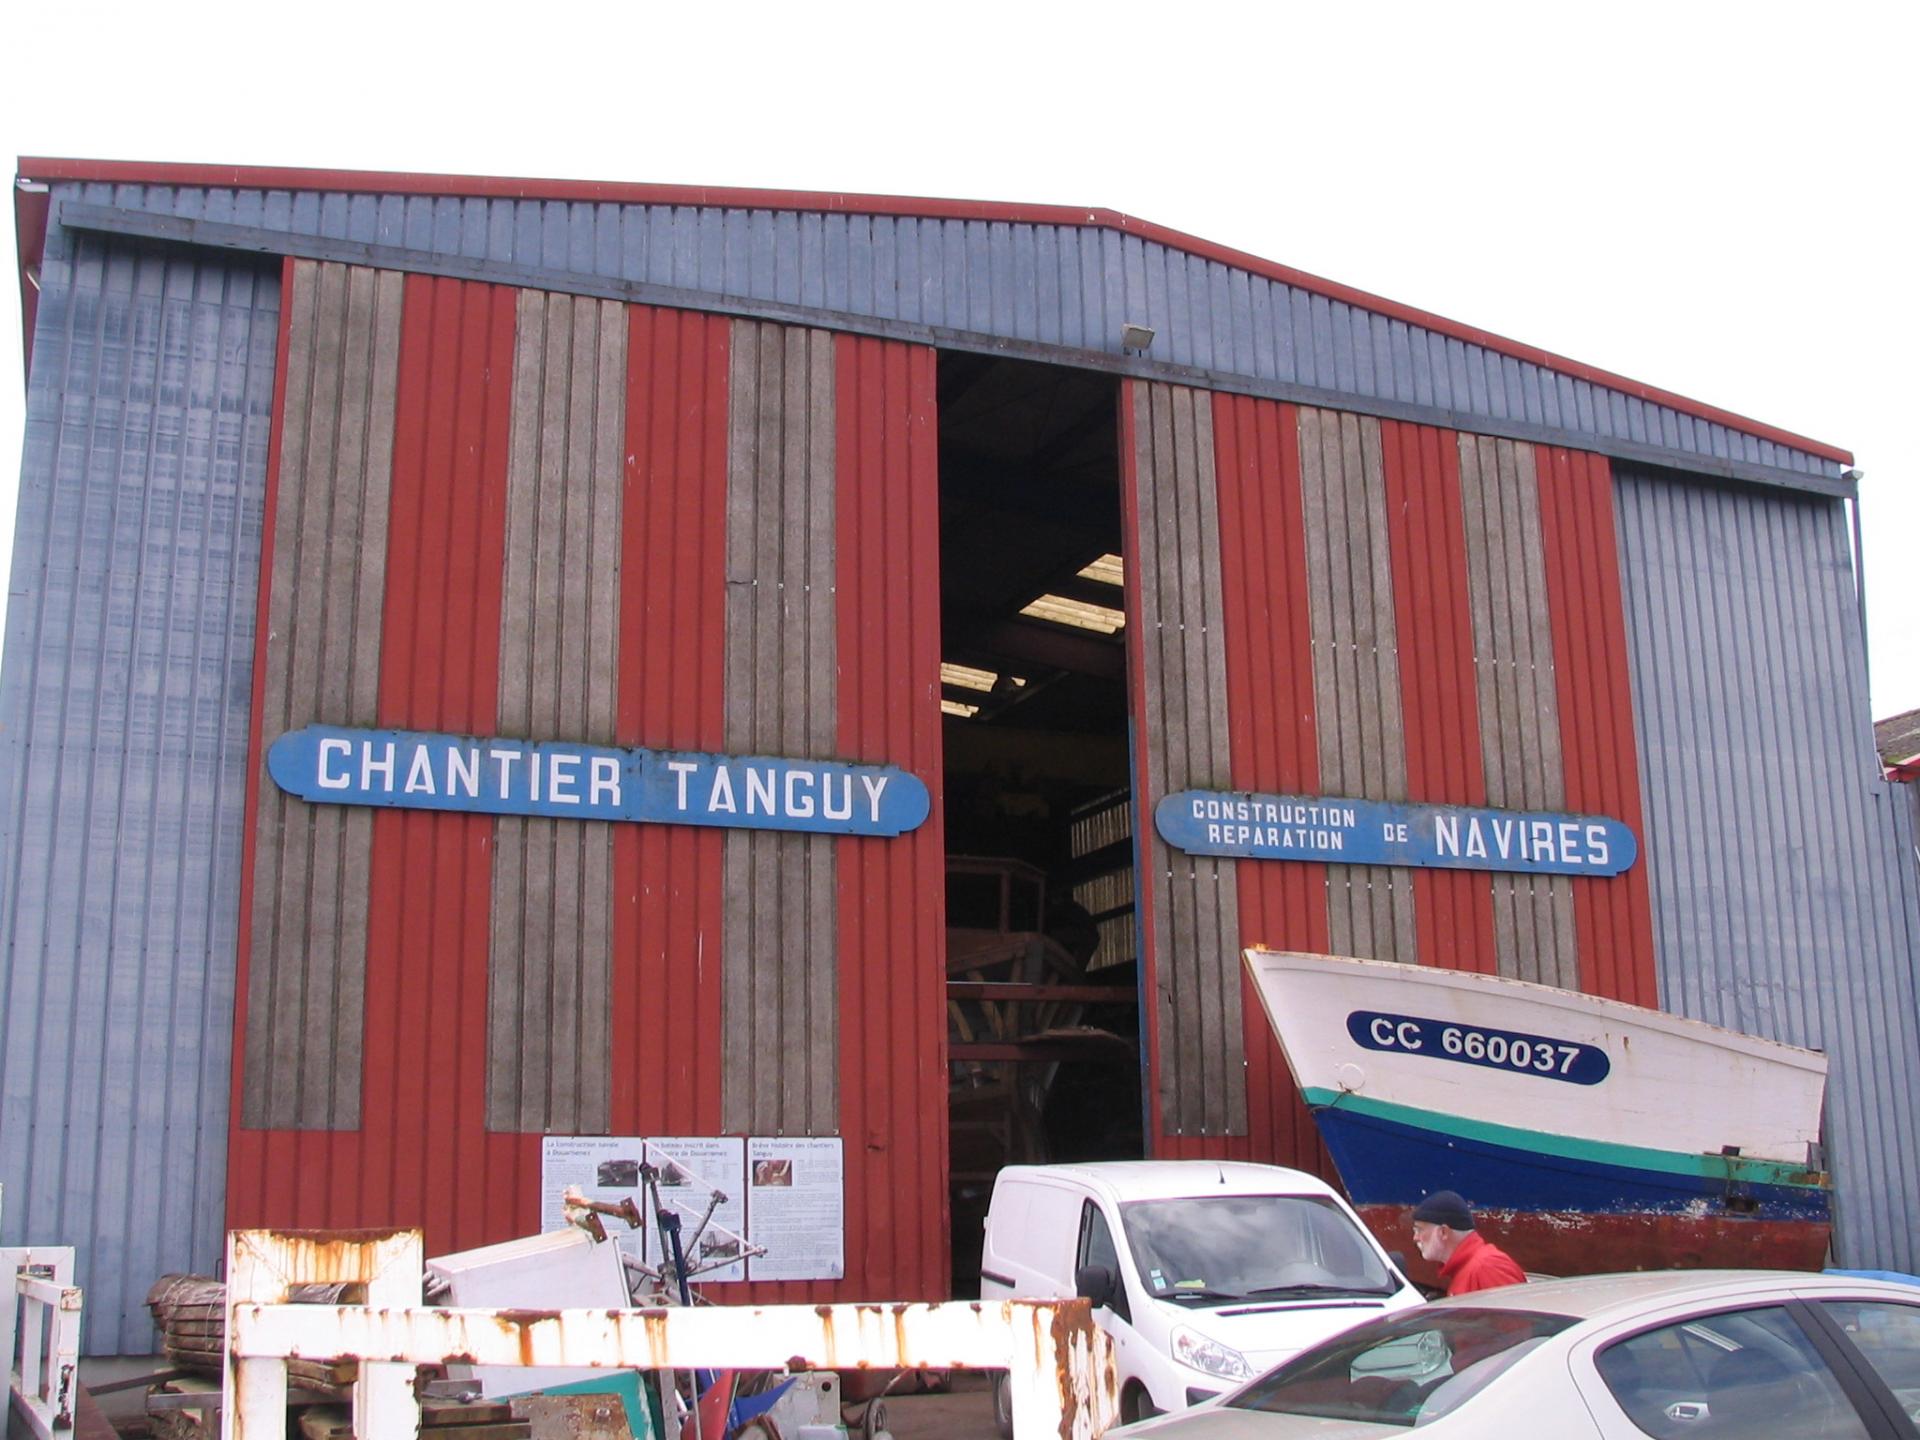 Chantier tanguy